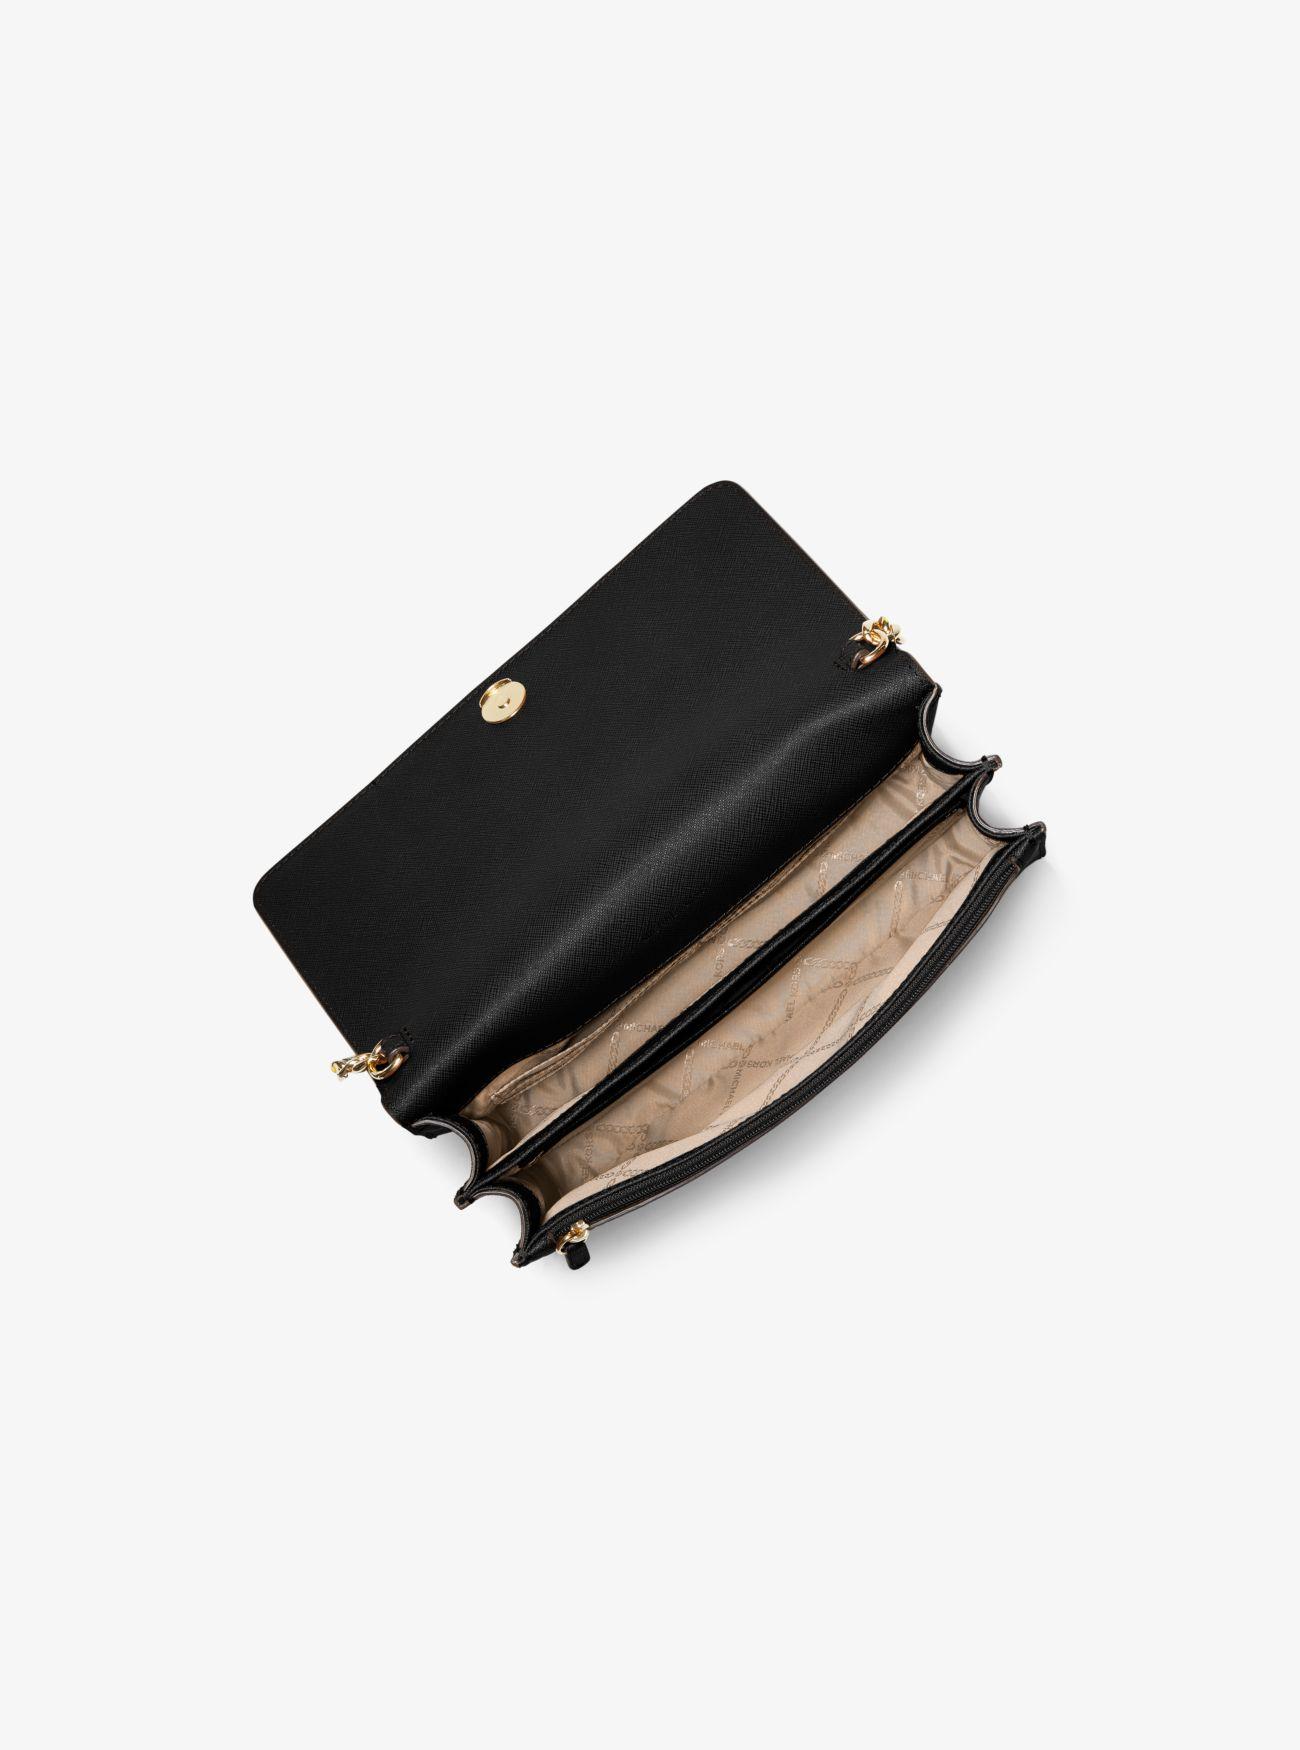 Michael Kors Daniela Large Saffiano Leather Crossbody Bag in Black | Lyst UK